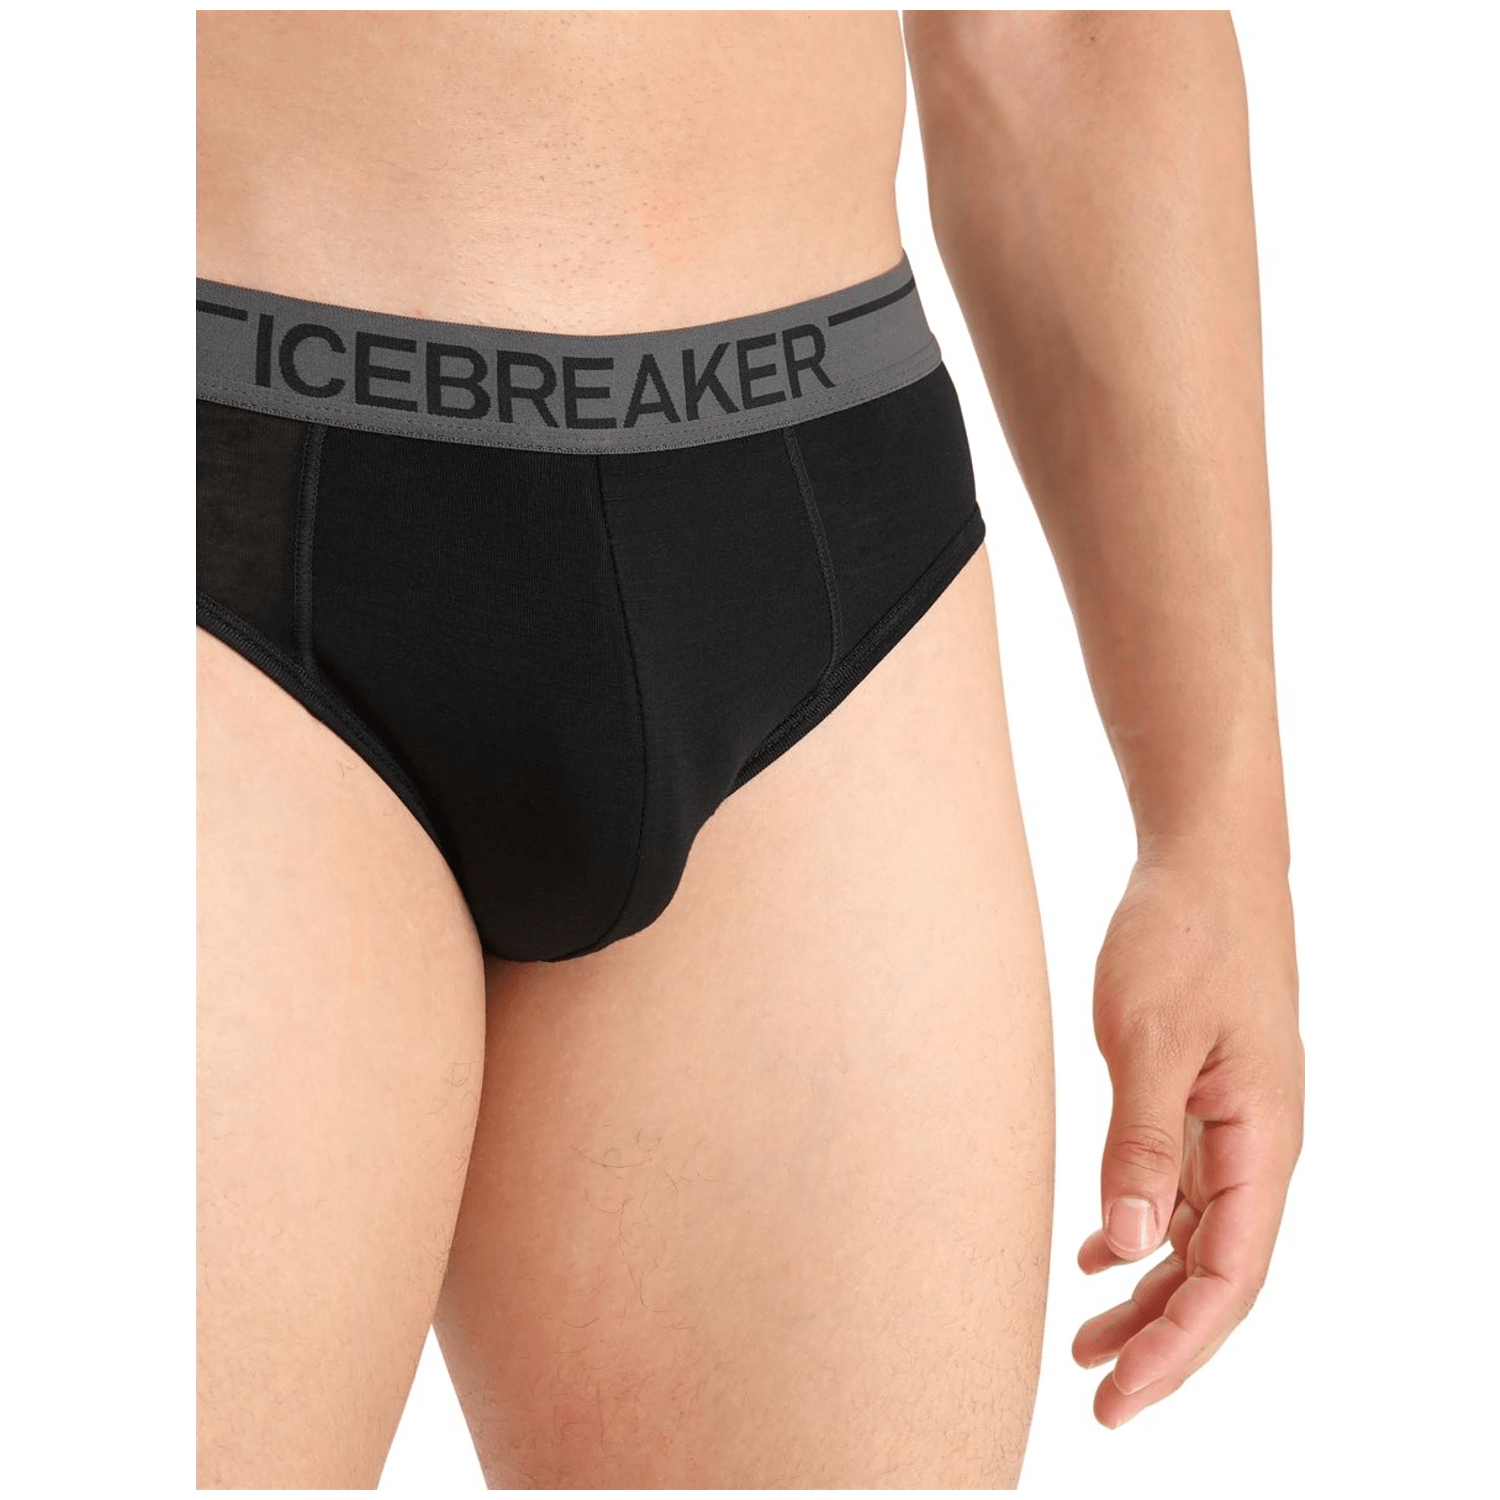 Icebreaker Anatomica Briefs Herren Unterhose